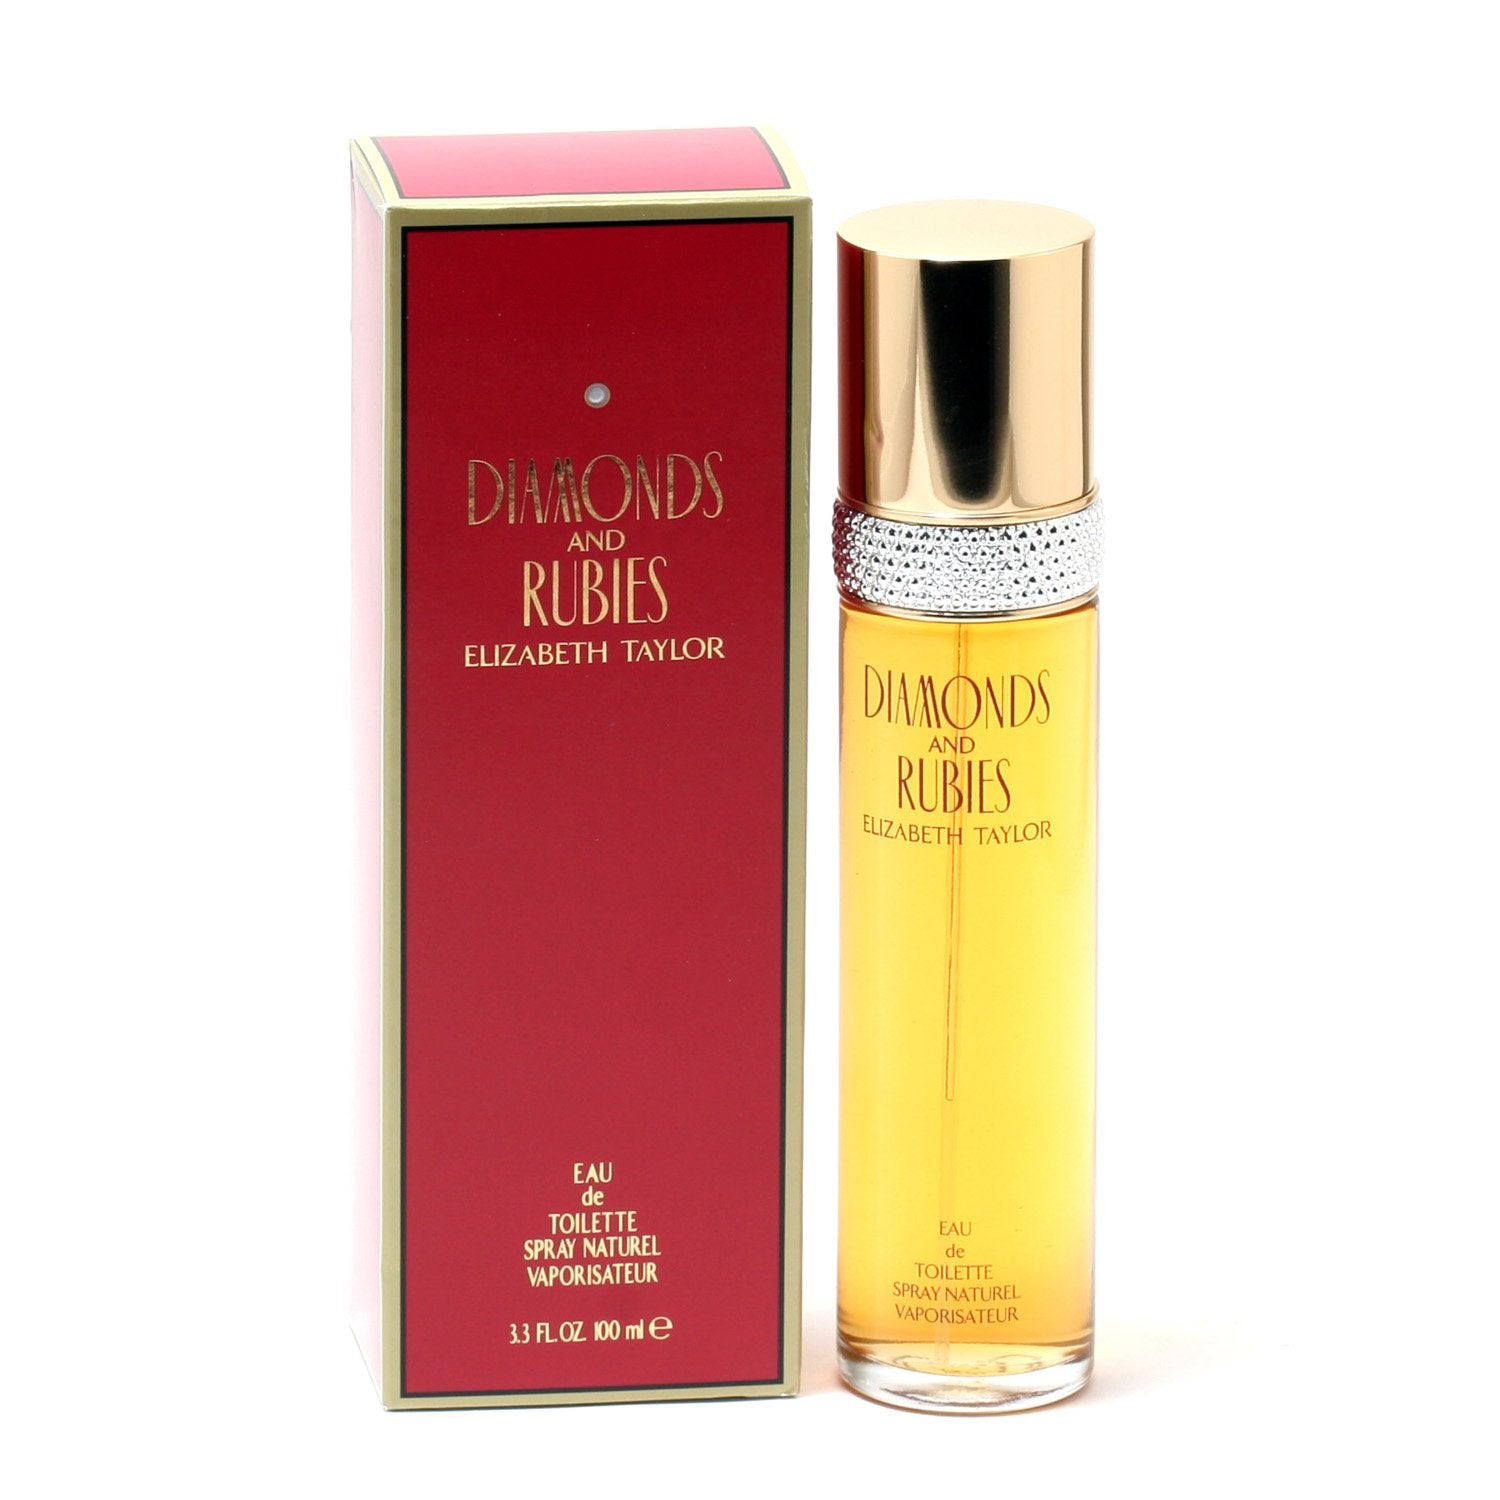 Perfume - DIAMONDS & RUBIES FOR WOMEN BY ELIZABETH TAYLOR - EAU DE TOILETTE SPRAY, 3.3 OZ